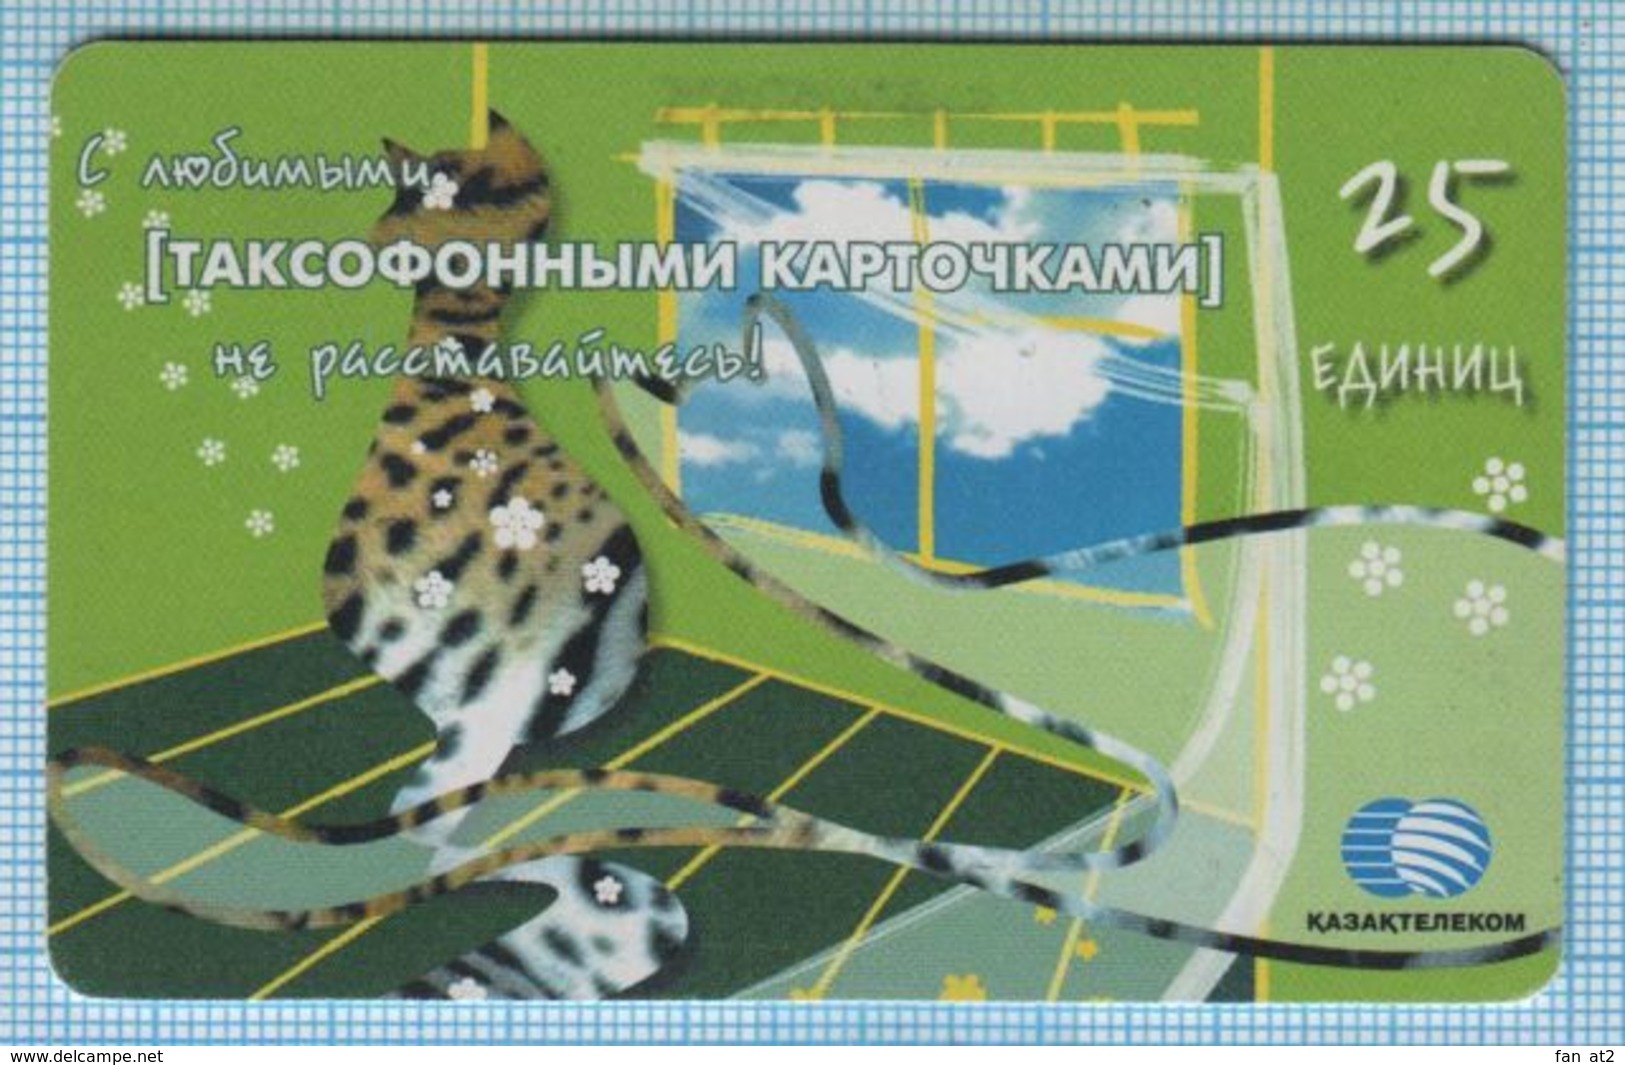 KAZAKHSTAN / KAZAKTELECOM / FAUNA /CAT / Phonecard /25 UNITS / 2000s - Kazakhstan